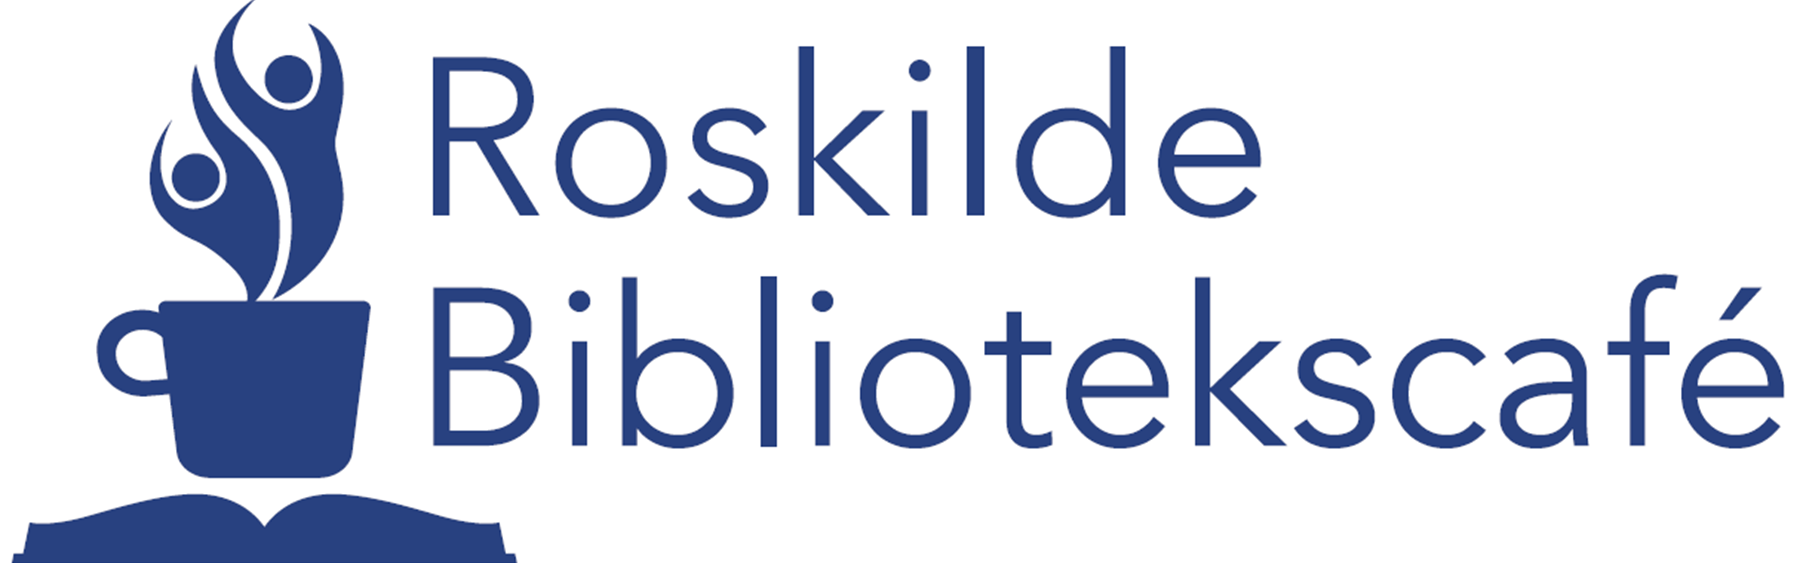 Roskilde Bibliotekscafés logo